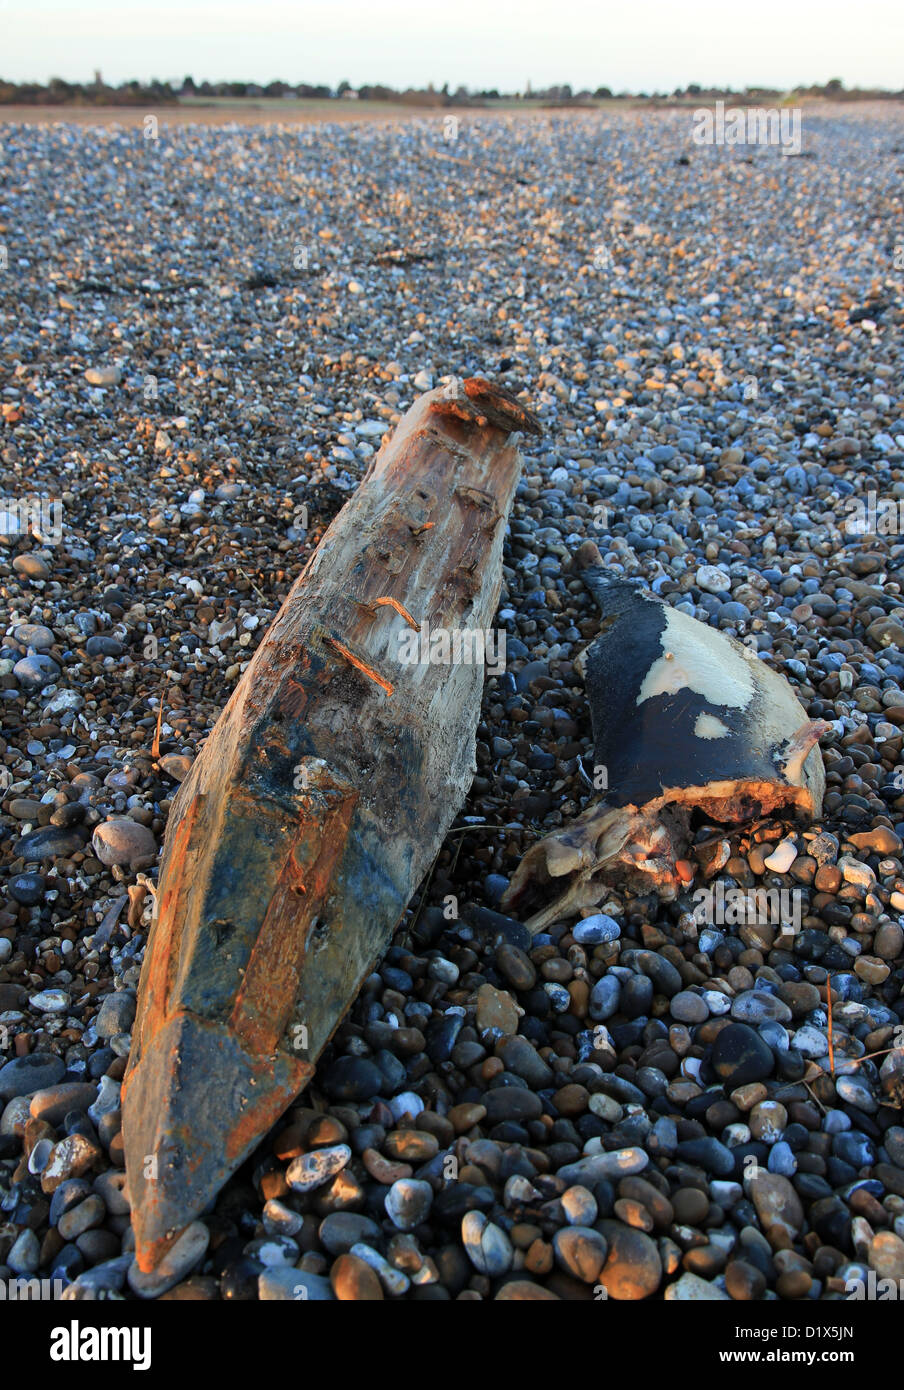 beach debris on Walberswick beach, Suffolk, England, UK. Decomposed dolphin and post are unusual flotsam. Stock Photo